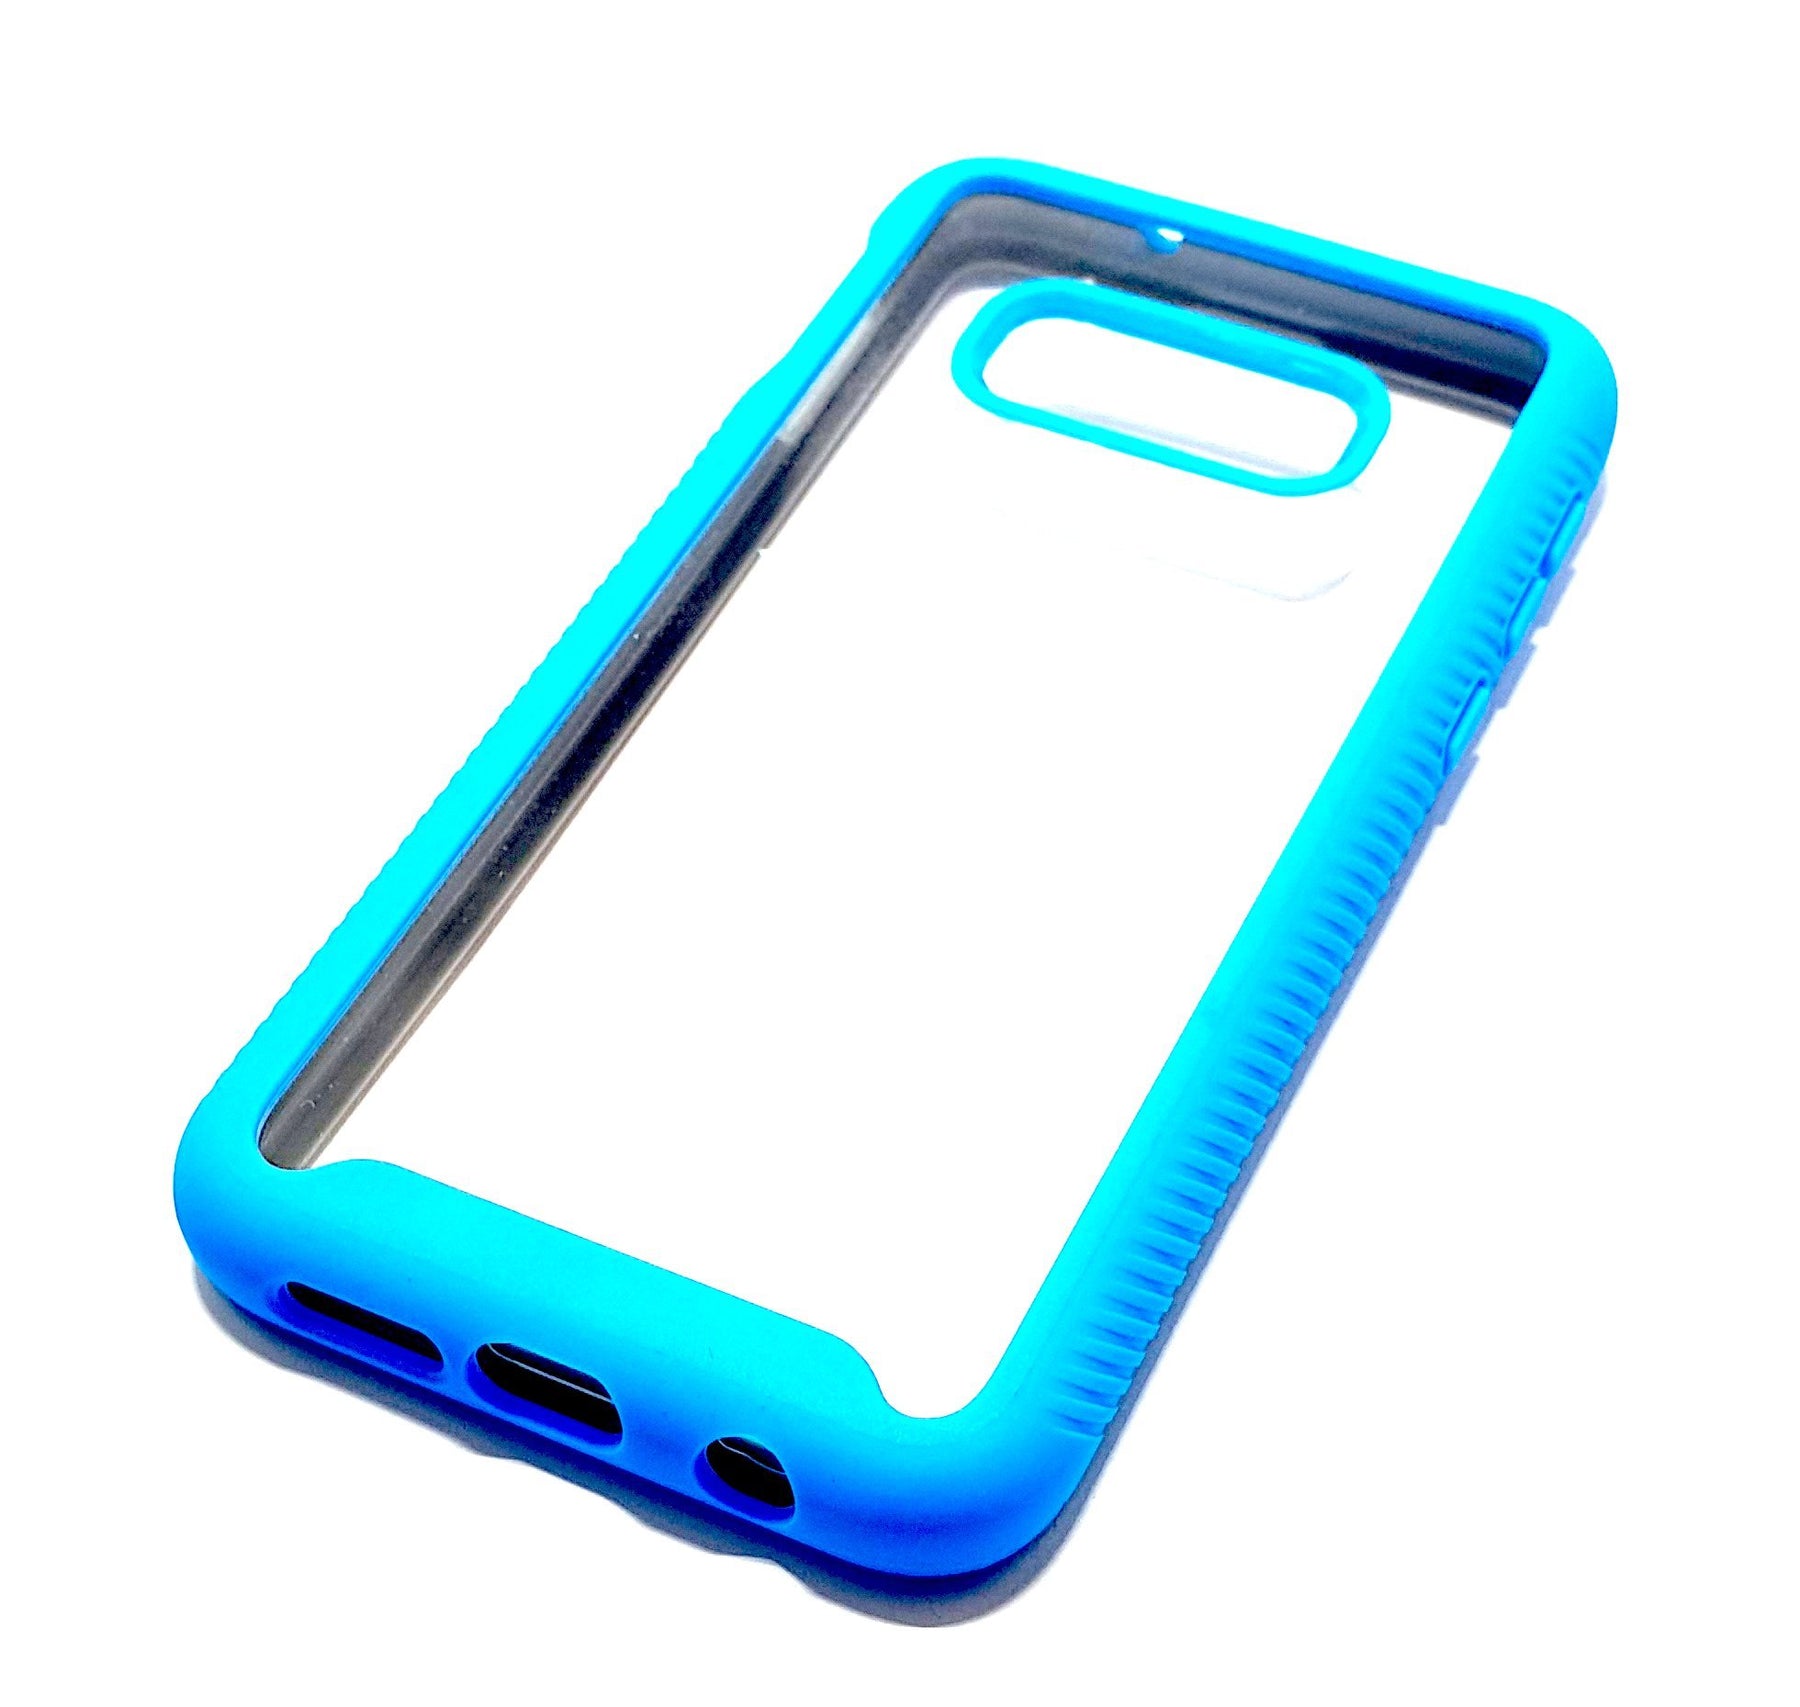 Samsung S10e Shockproof blue clear transparent phone case